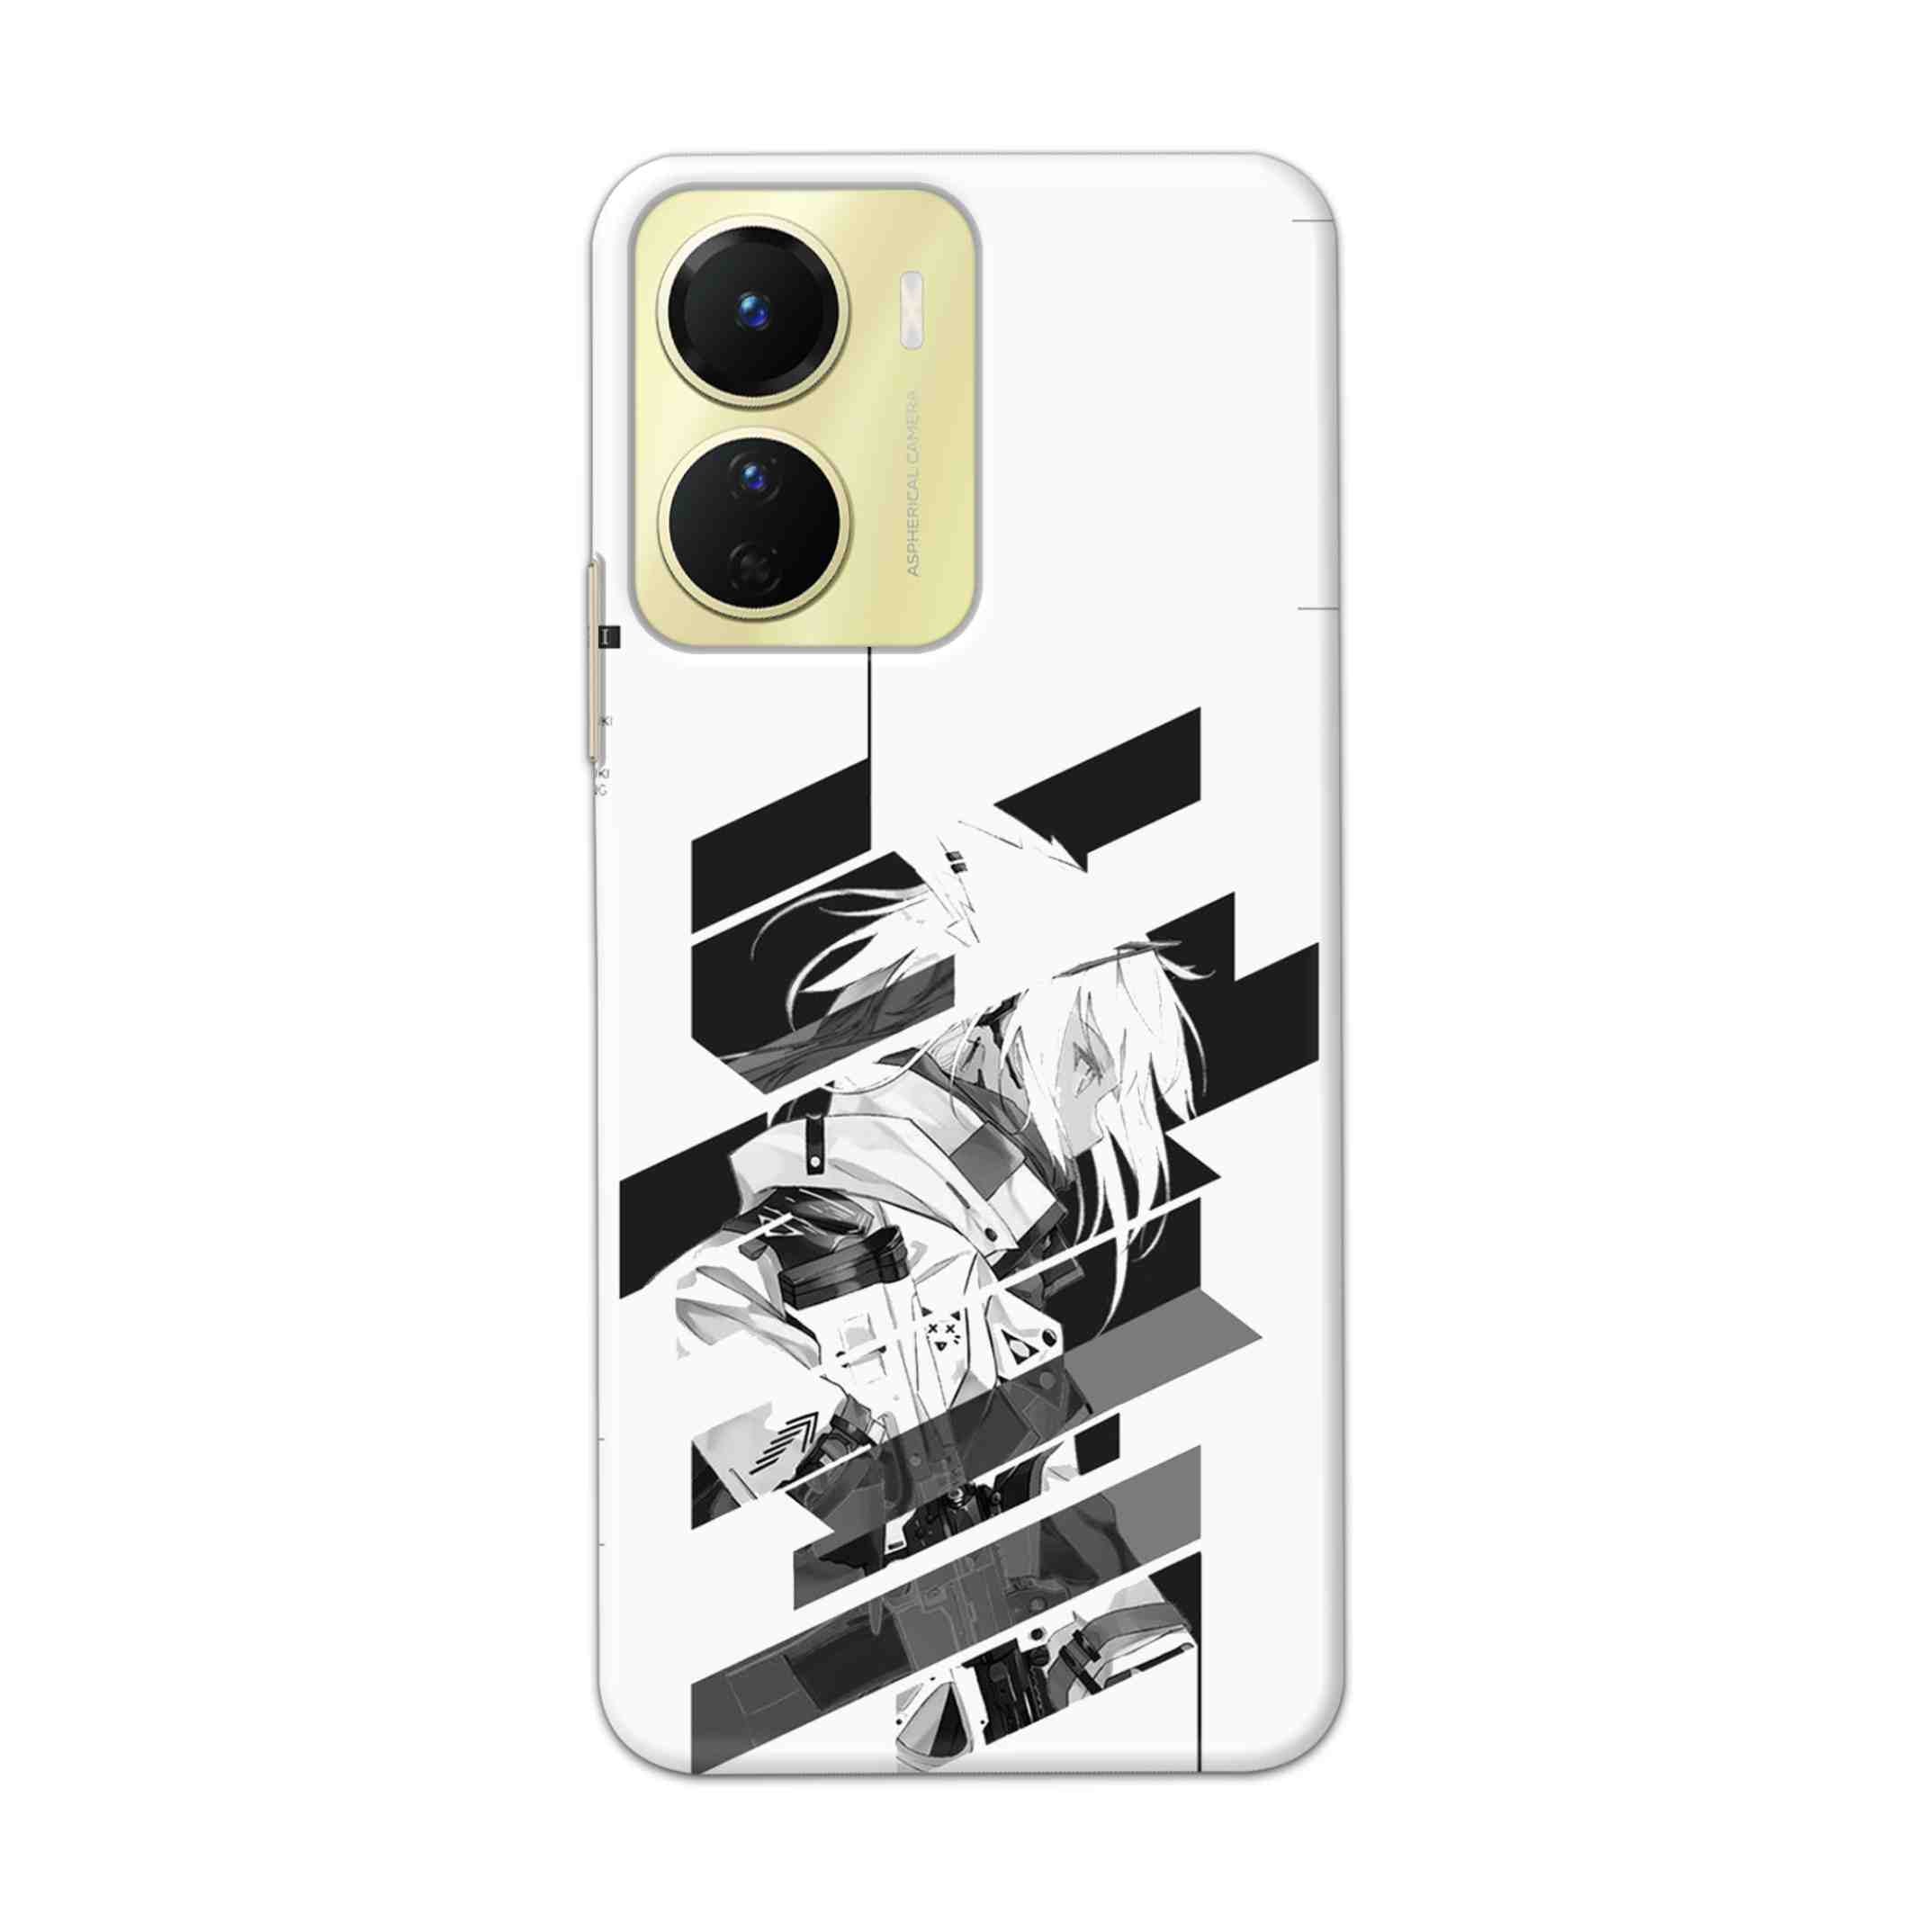 Buy Fubuki Hard Back Mobile Phone Case Cover For Vivo Y16 Online